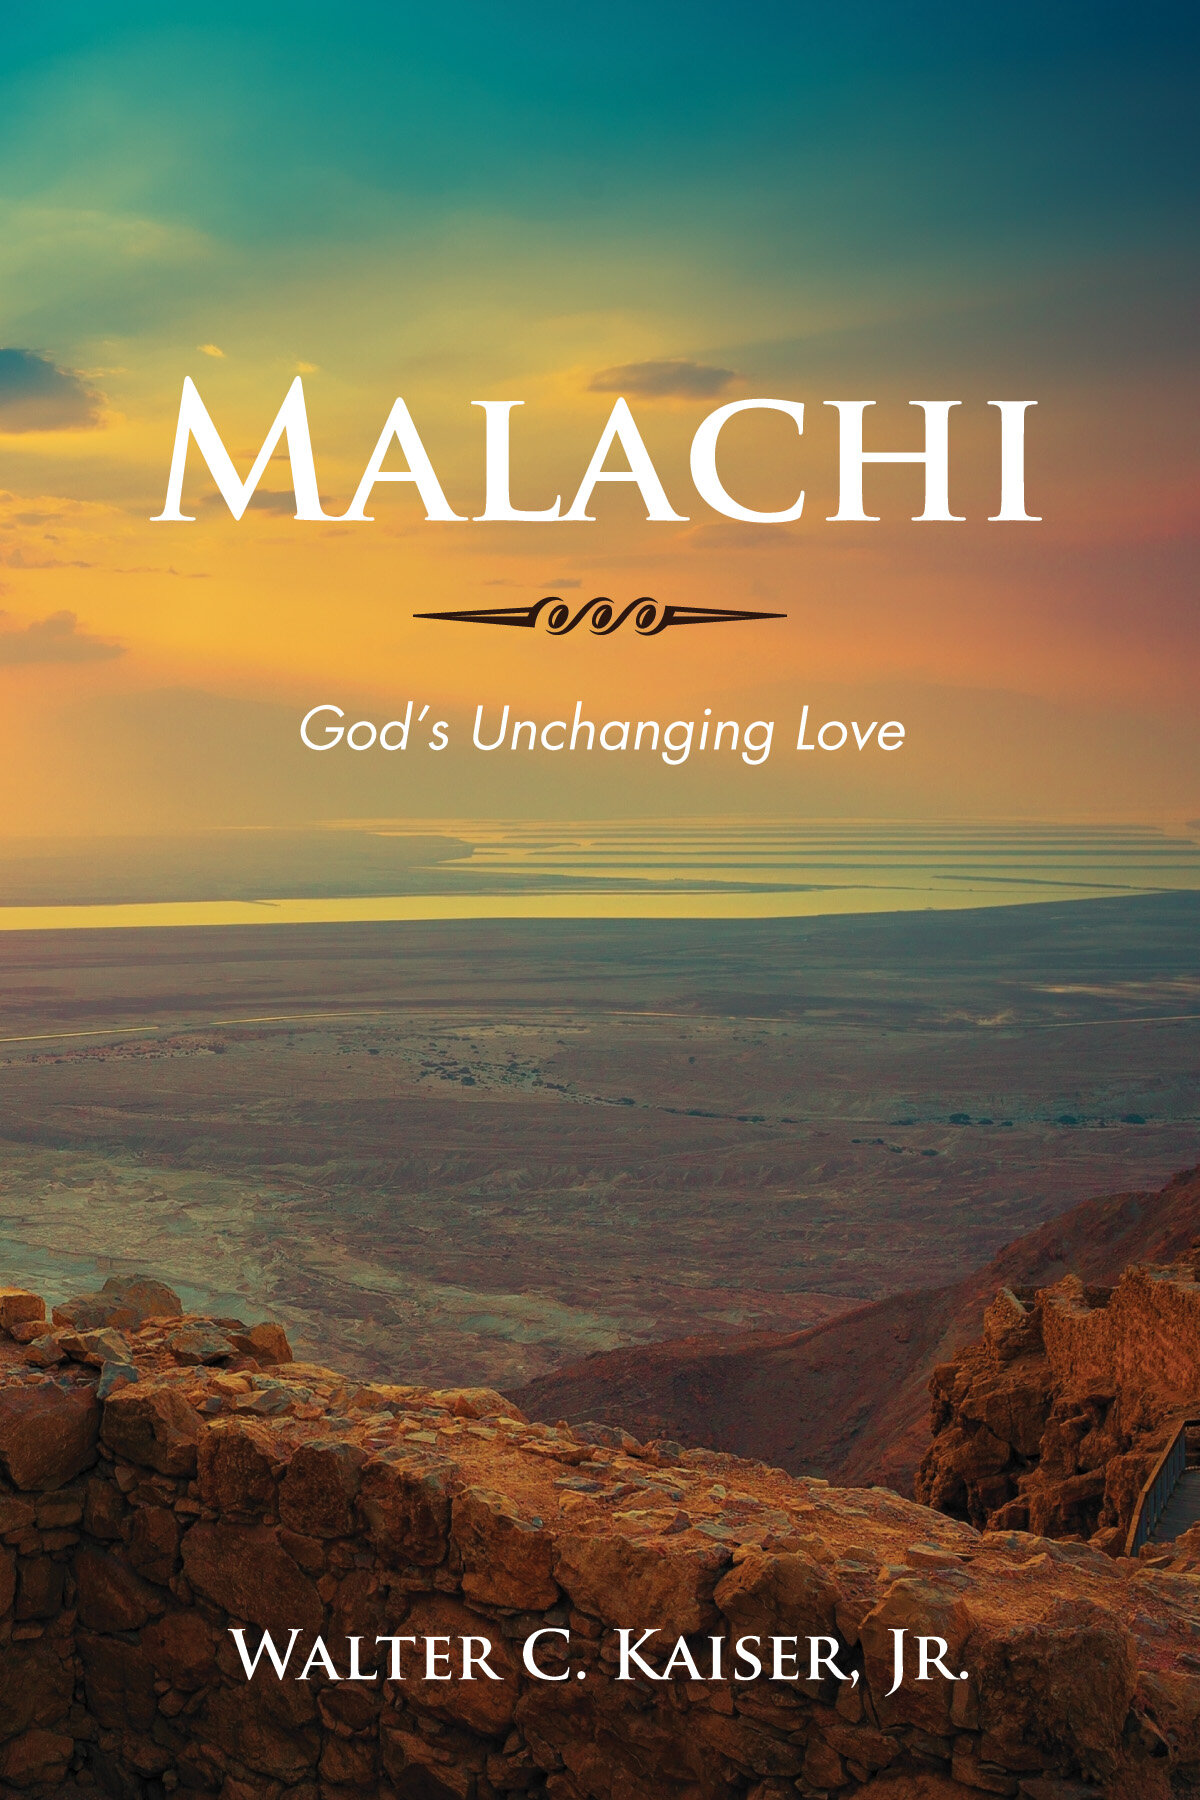 Malachi: God’s Unchanging Love